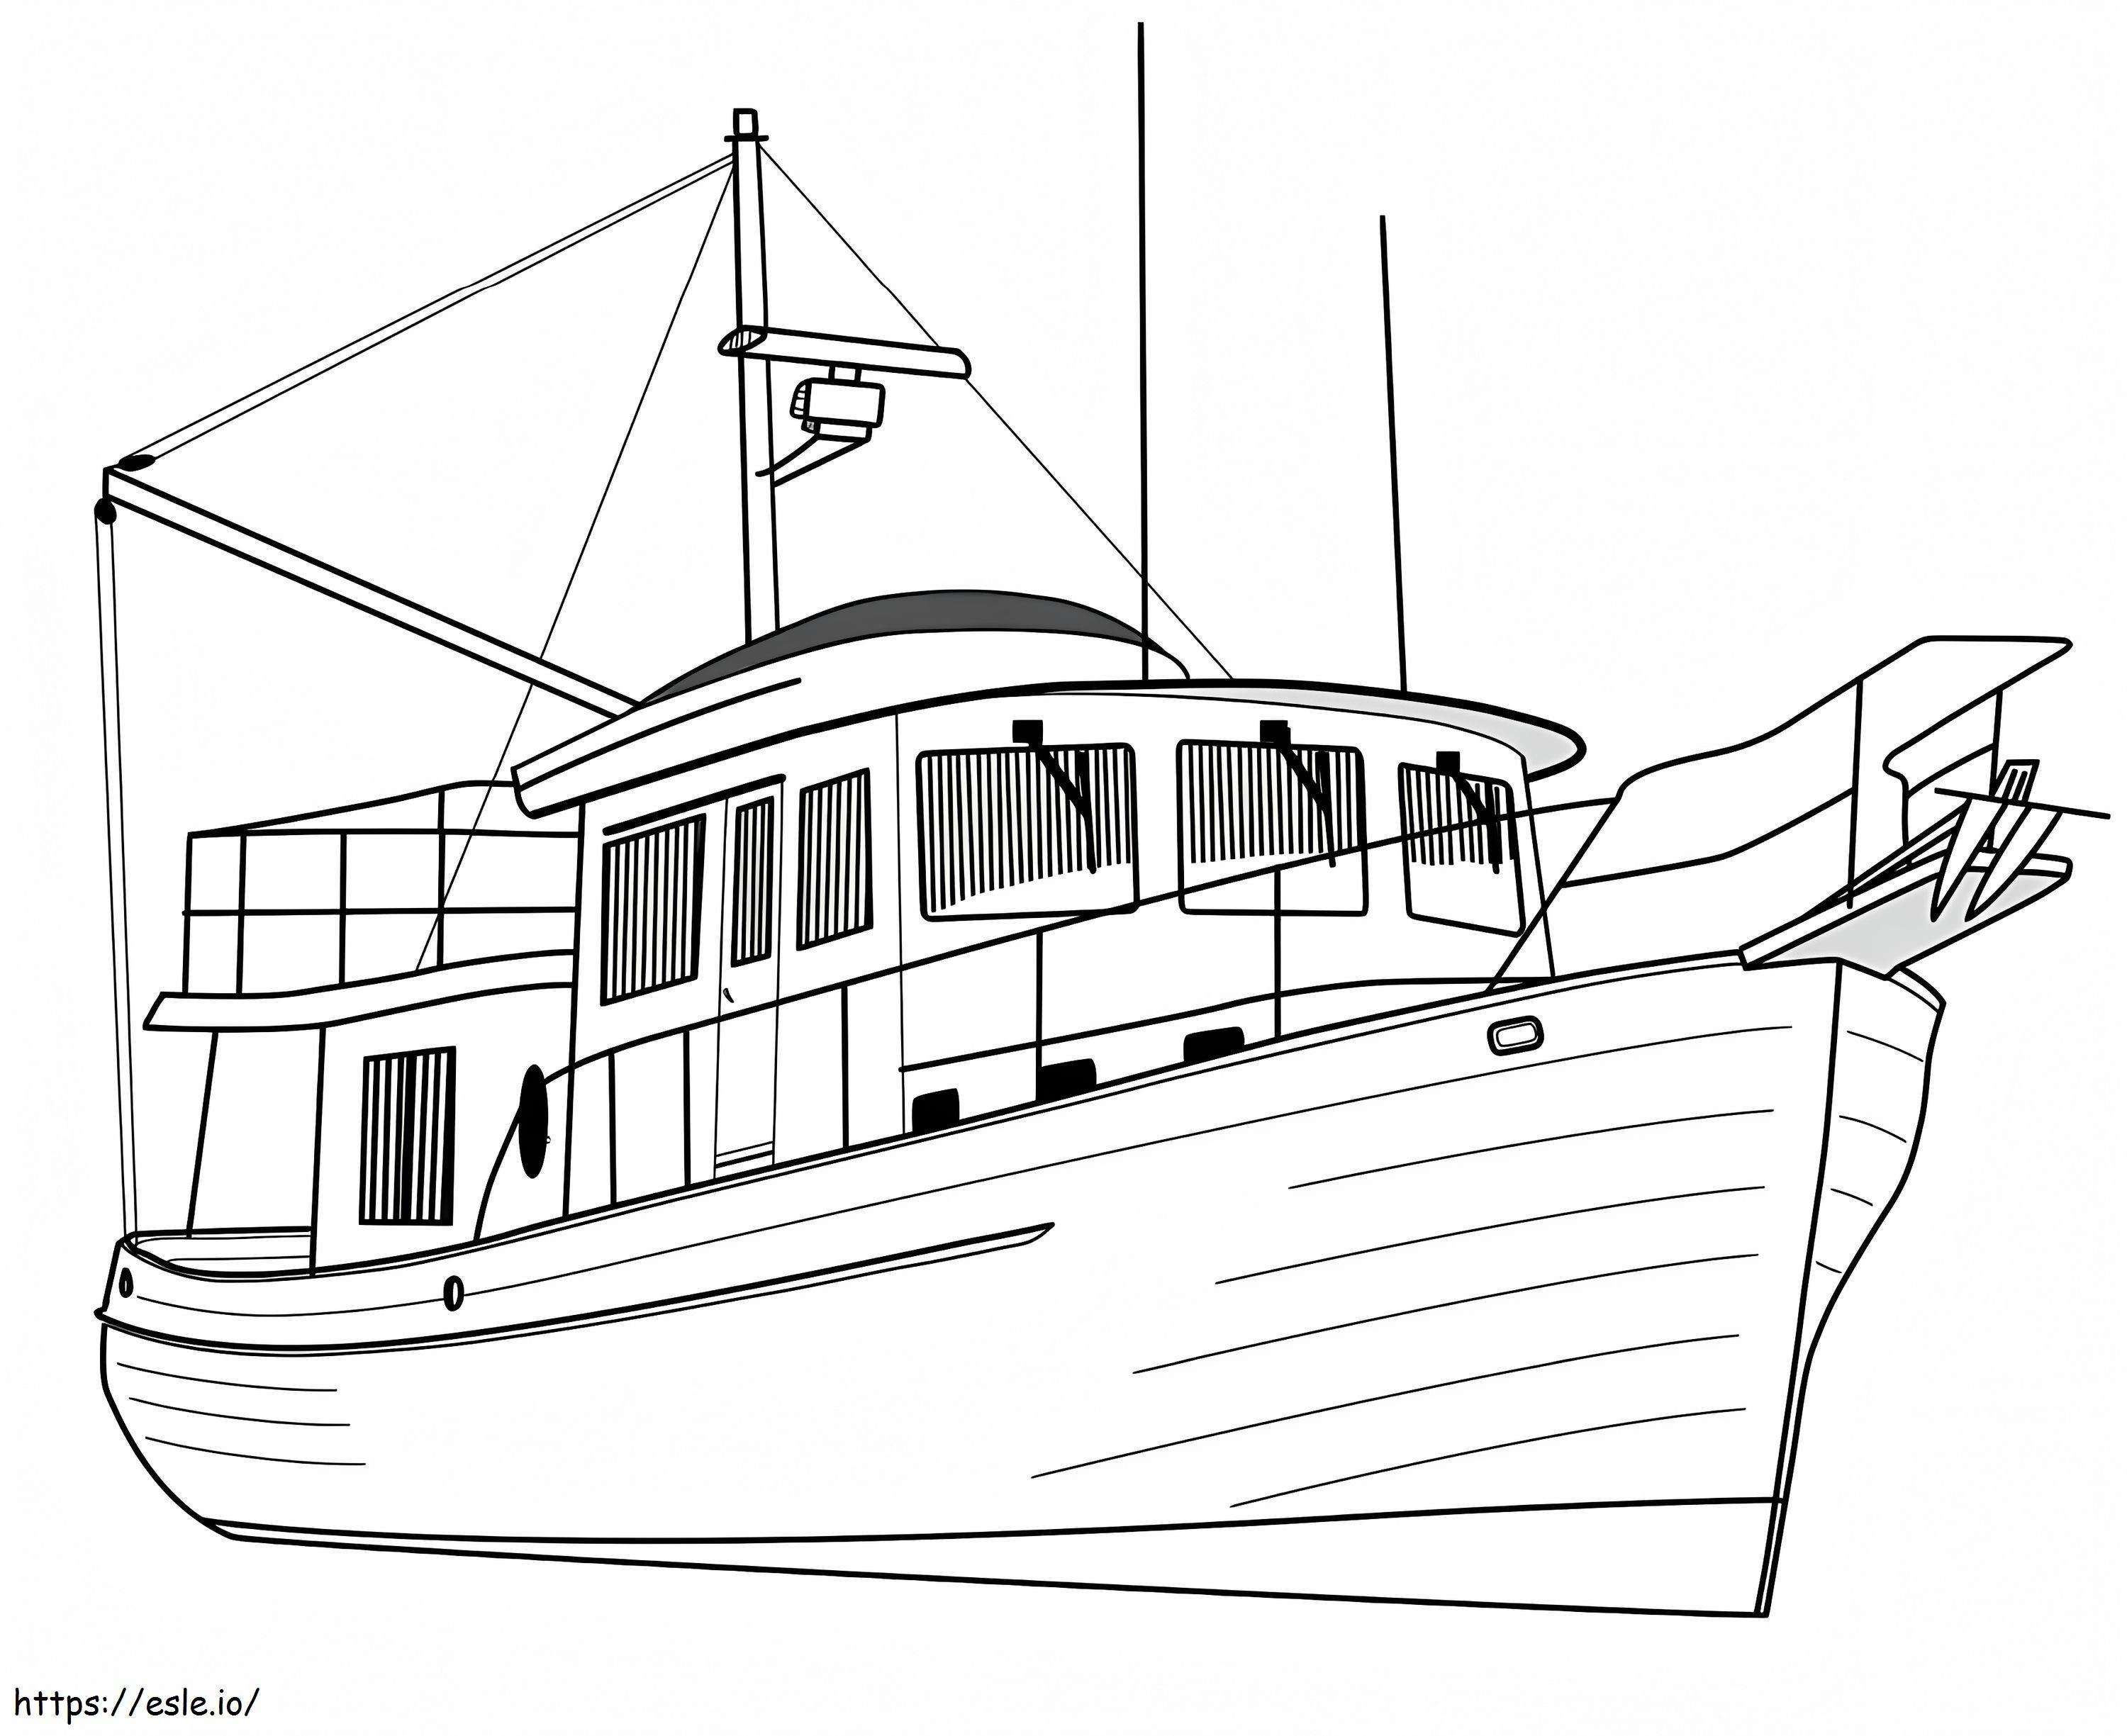  Lüks Trawler Yacht A4 boyama